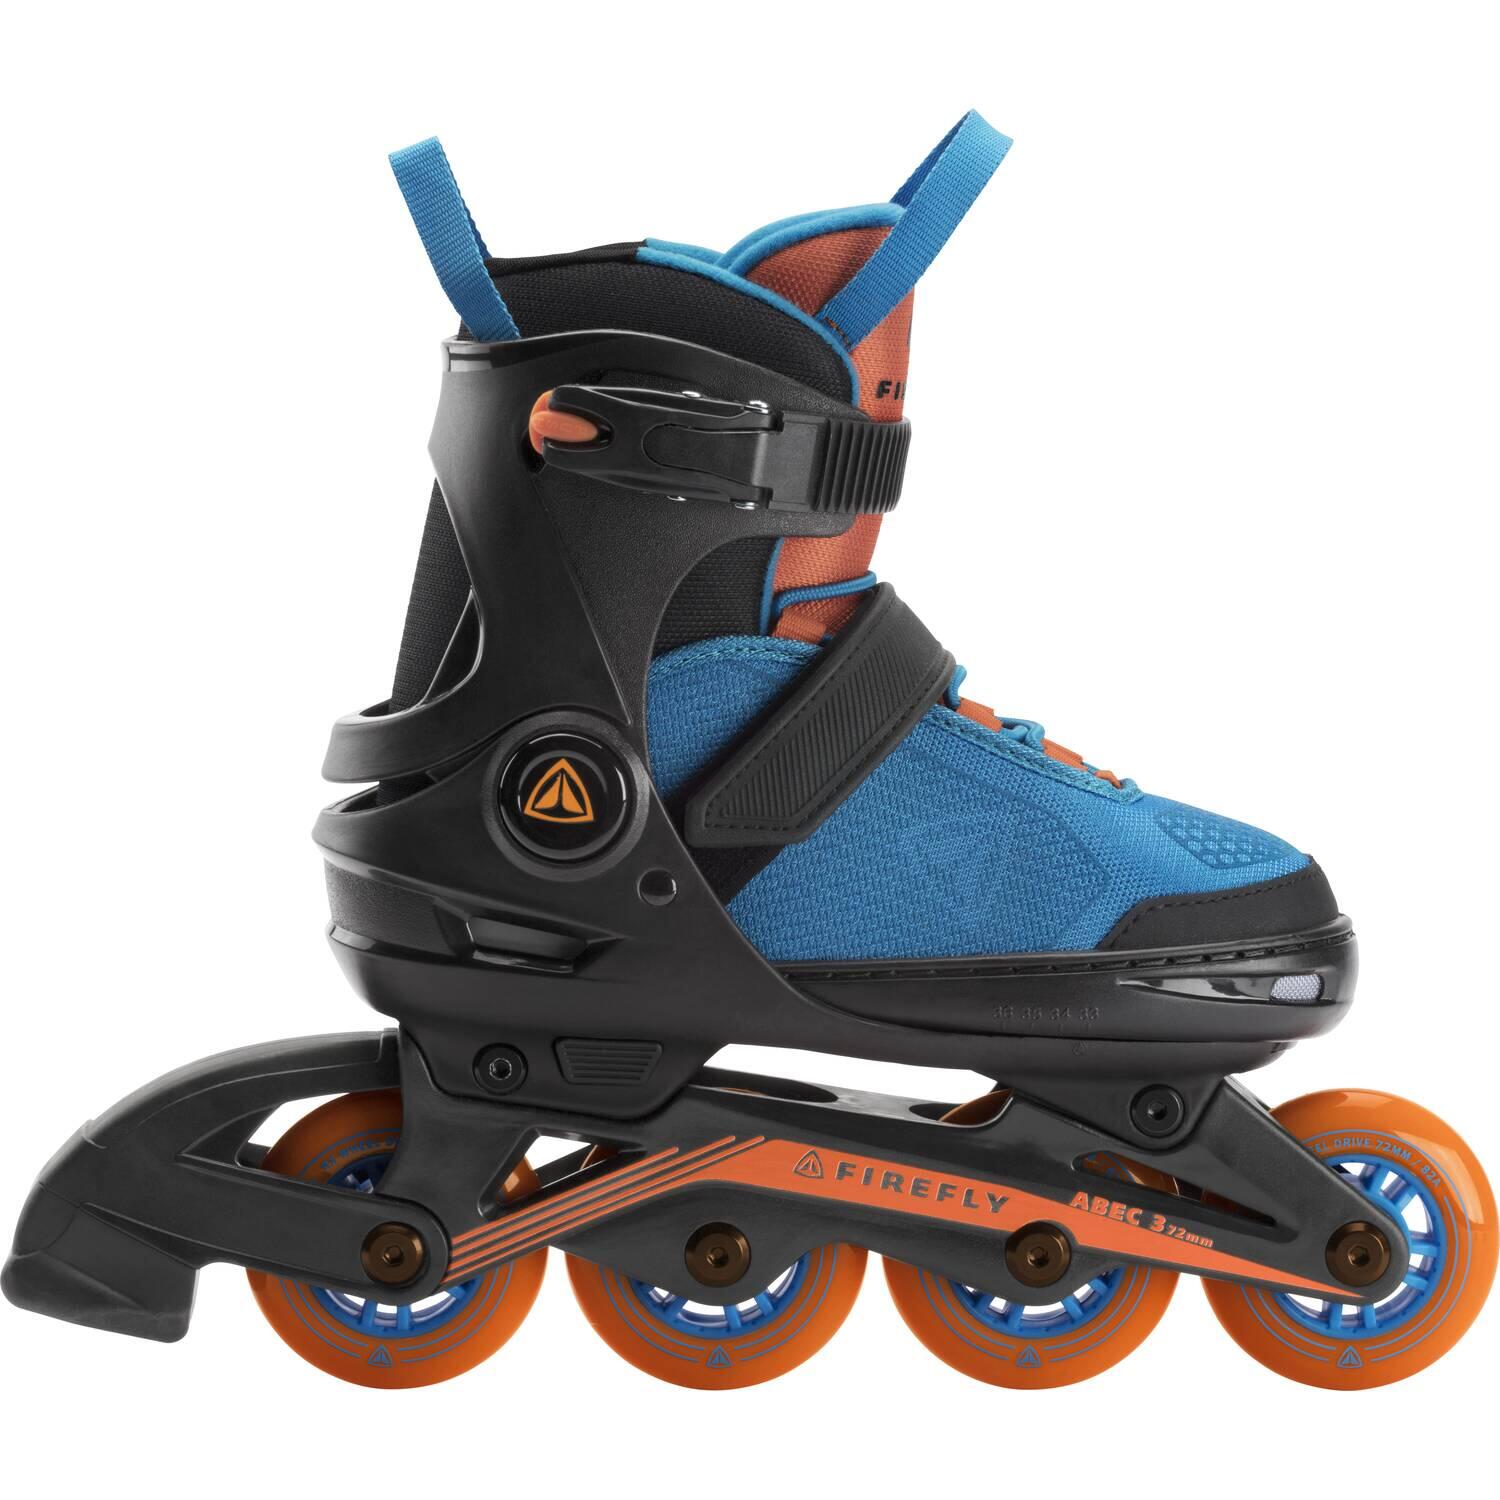 Firefly Jungen Inline Skates-289654 Skates, Black/Blue/ORA, 37